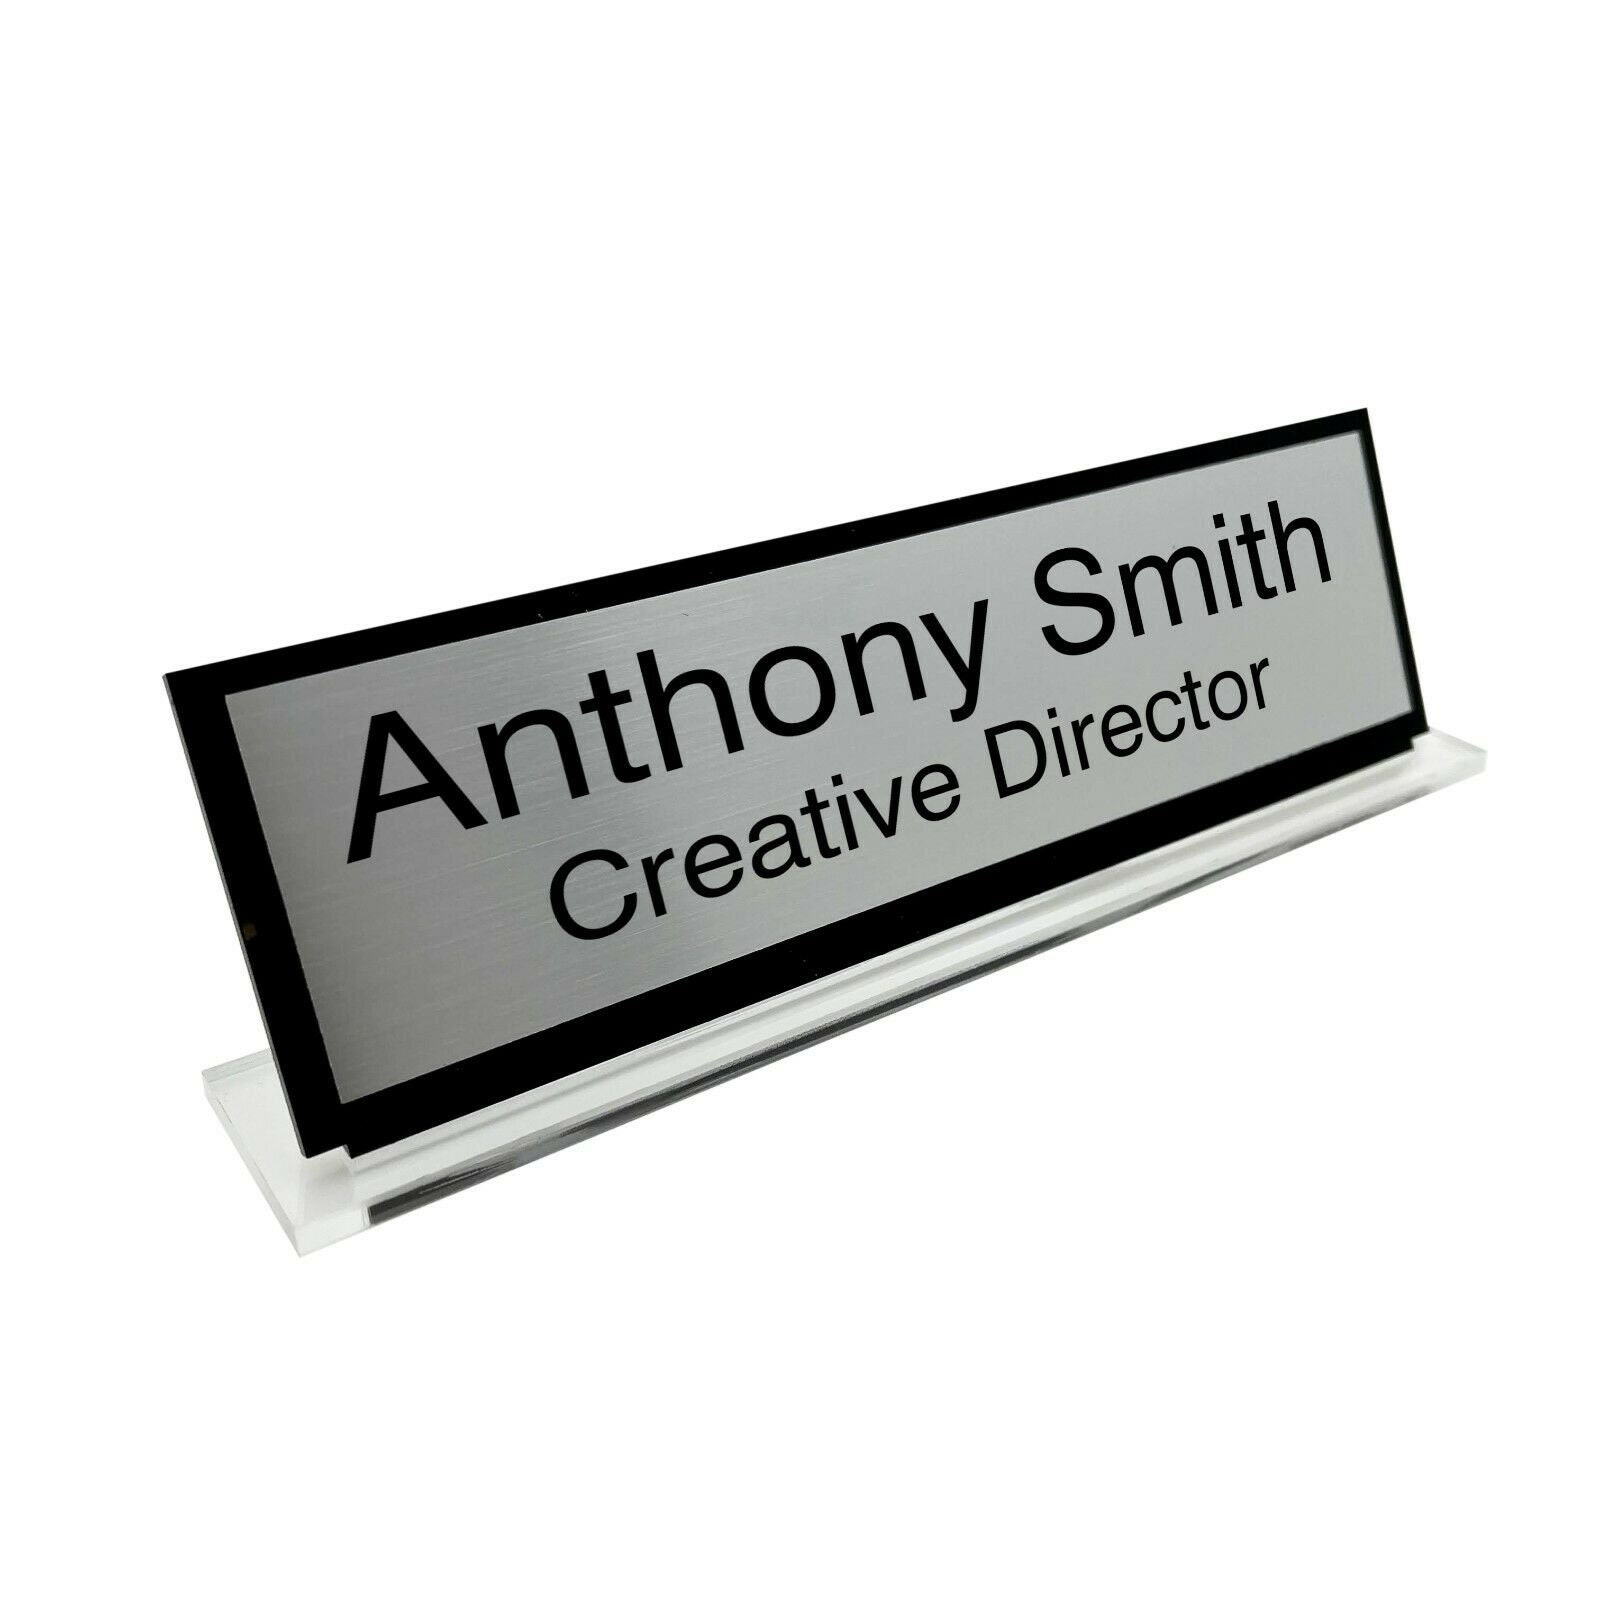 Personalized Desk name plate for women decor Men sign modern